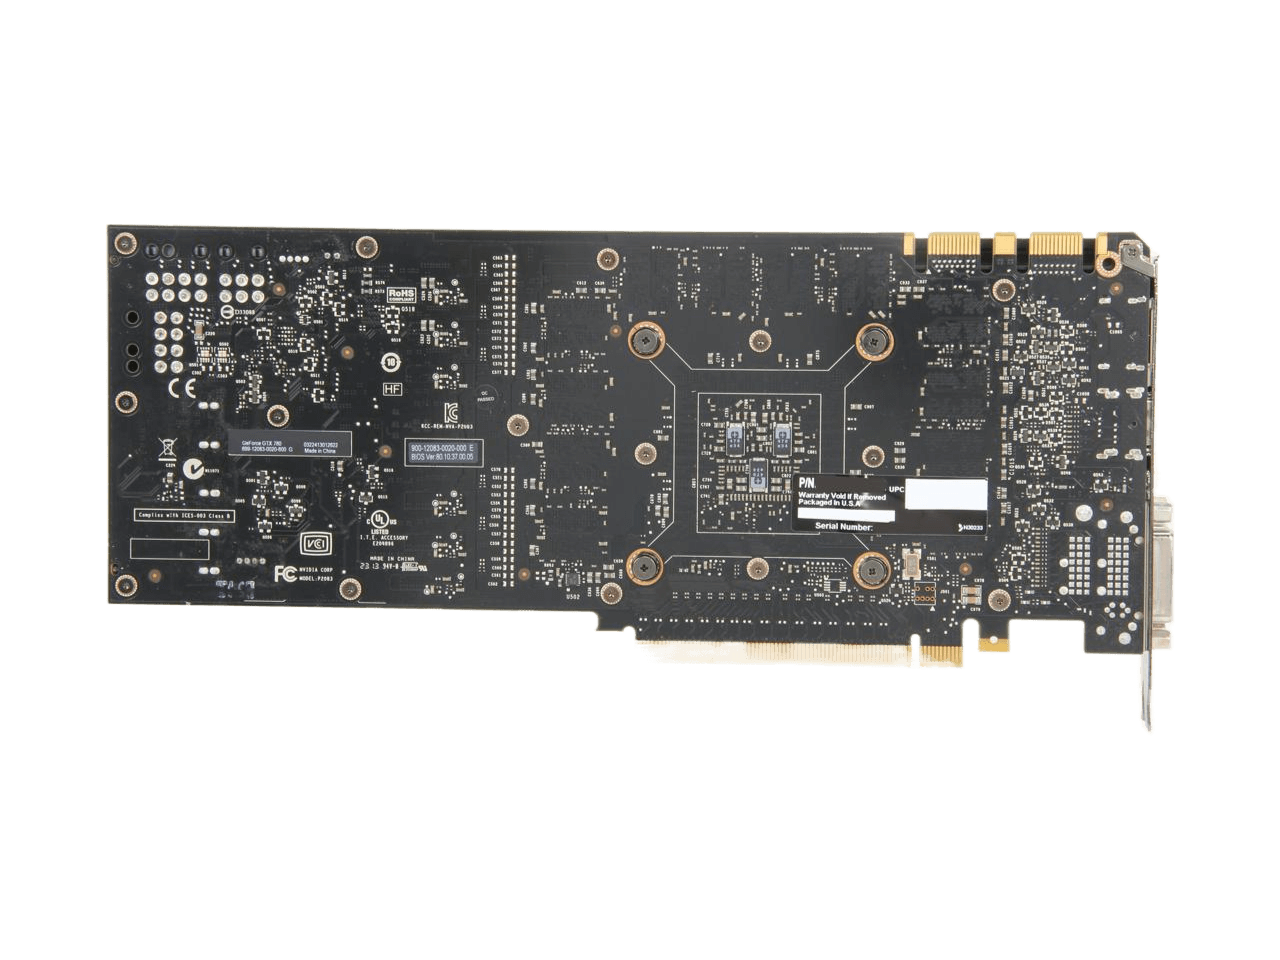 EVGA GeForce GTX 780 3GB 384-Bit GDDR5 PCI Express 3.0 SLI Support G-SYNC Support Video Card 03G-P4-2781-KR